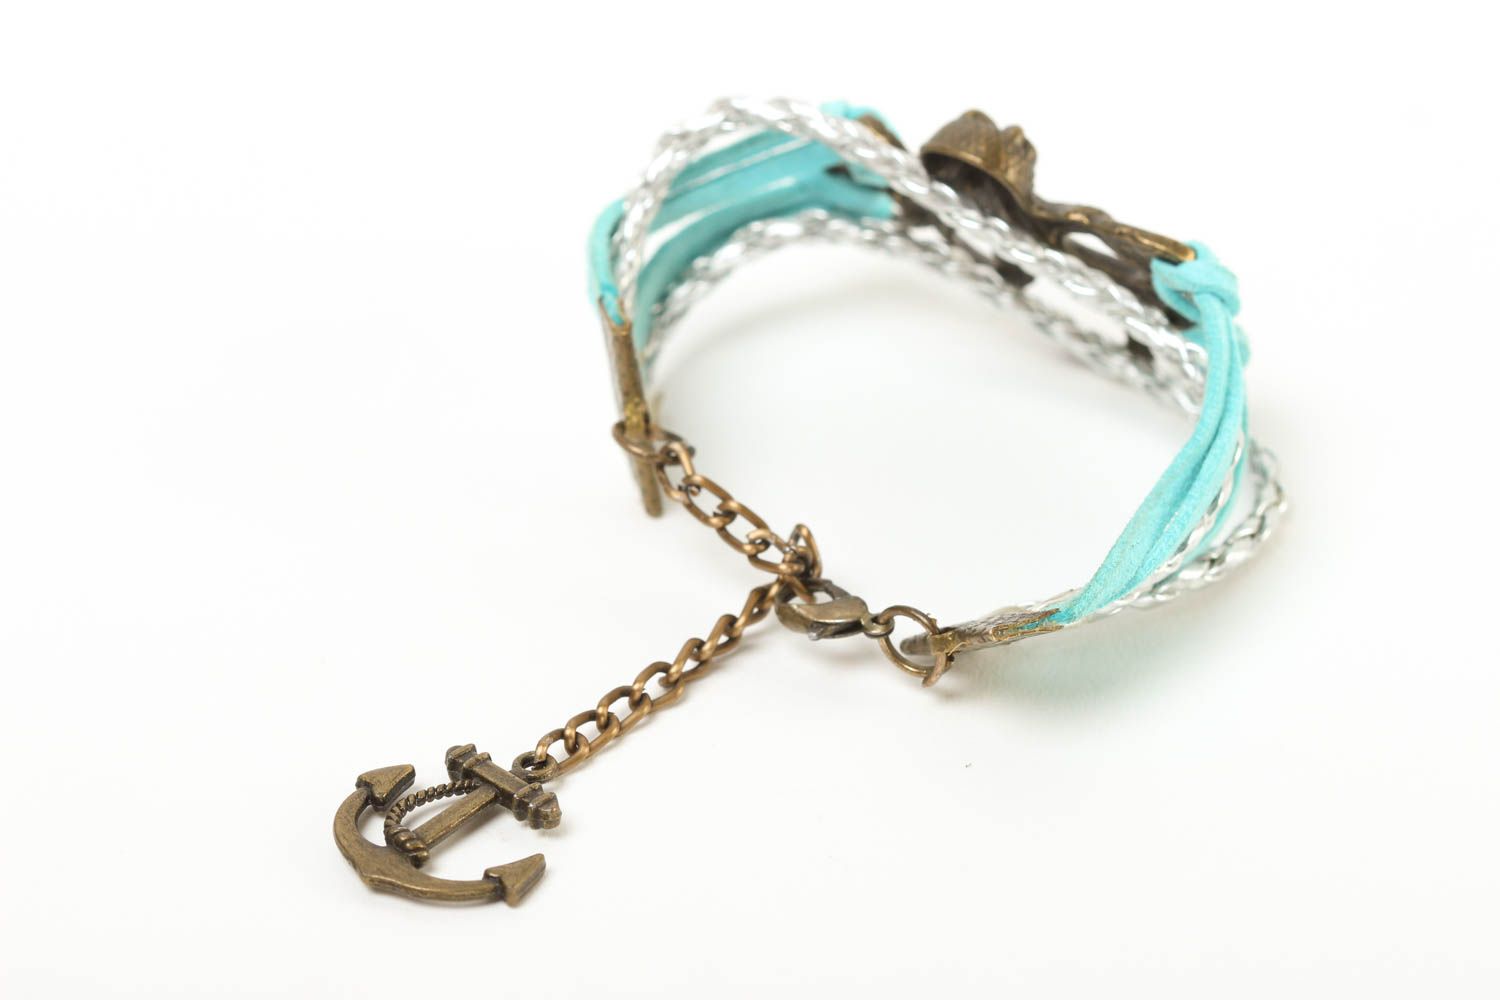 Unusual handmade leather bracelet designs suede wrist bracelet gifts for her photo 4